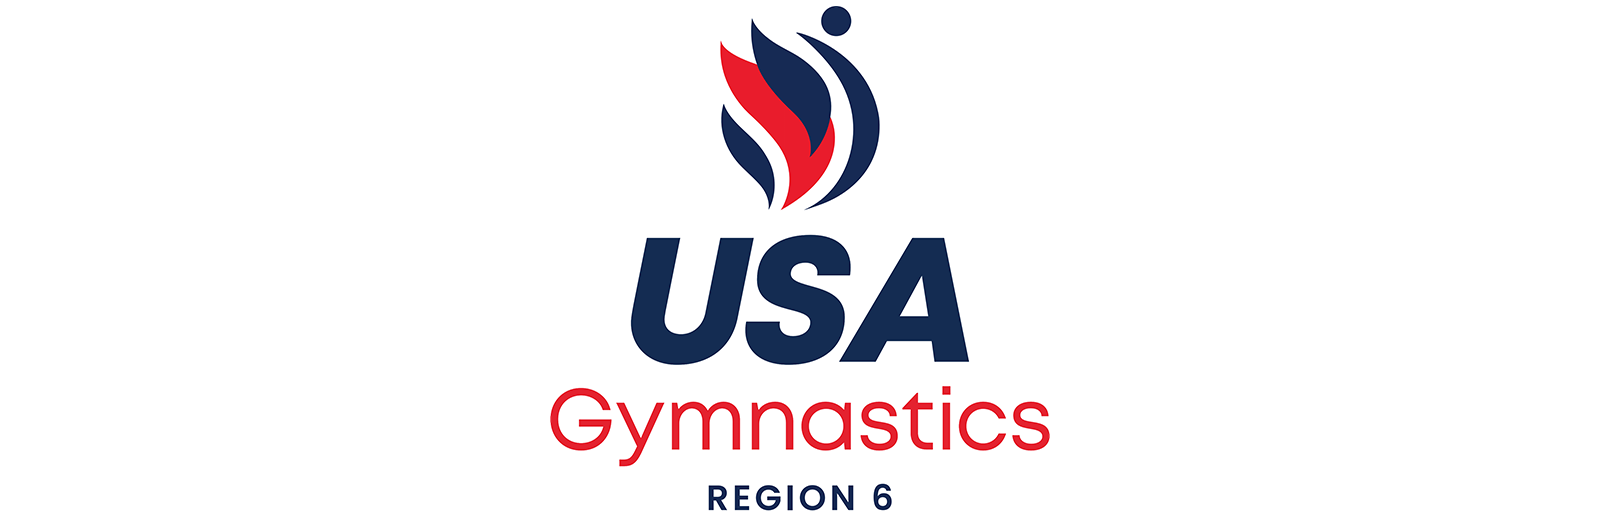 USA Gymnastics 